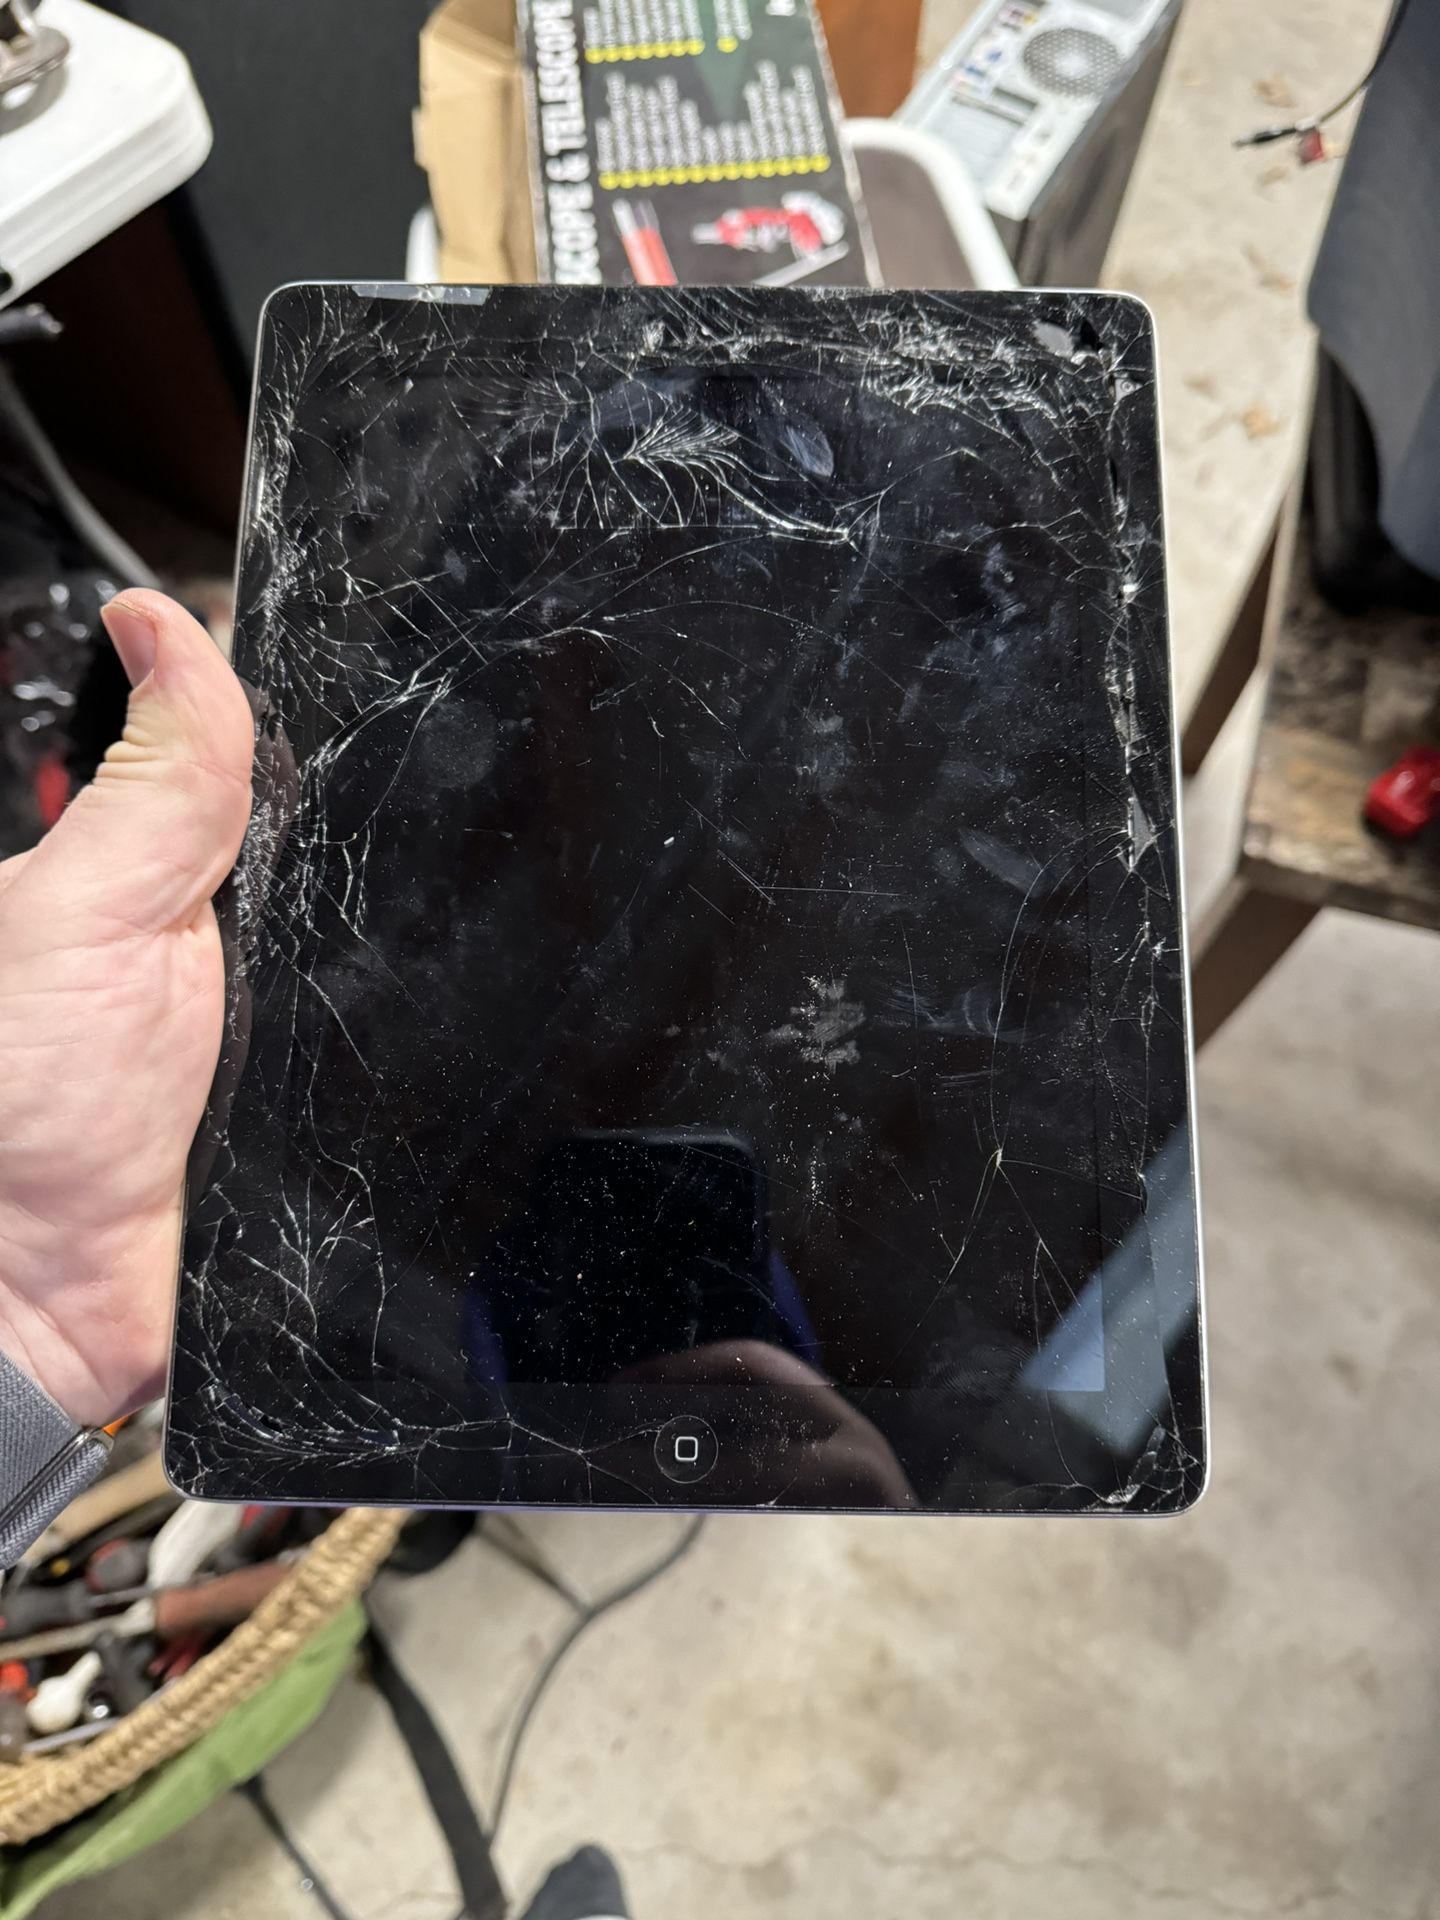 iPad 4th Gen Broken As Is For Parts Etc Wichita Area 